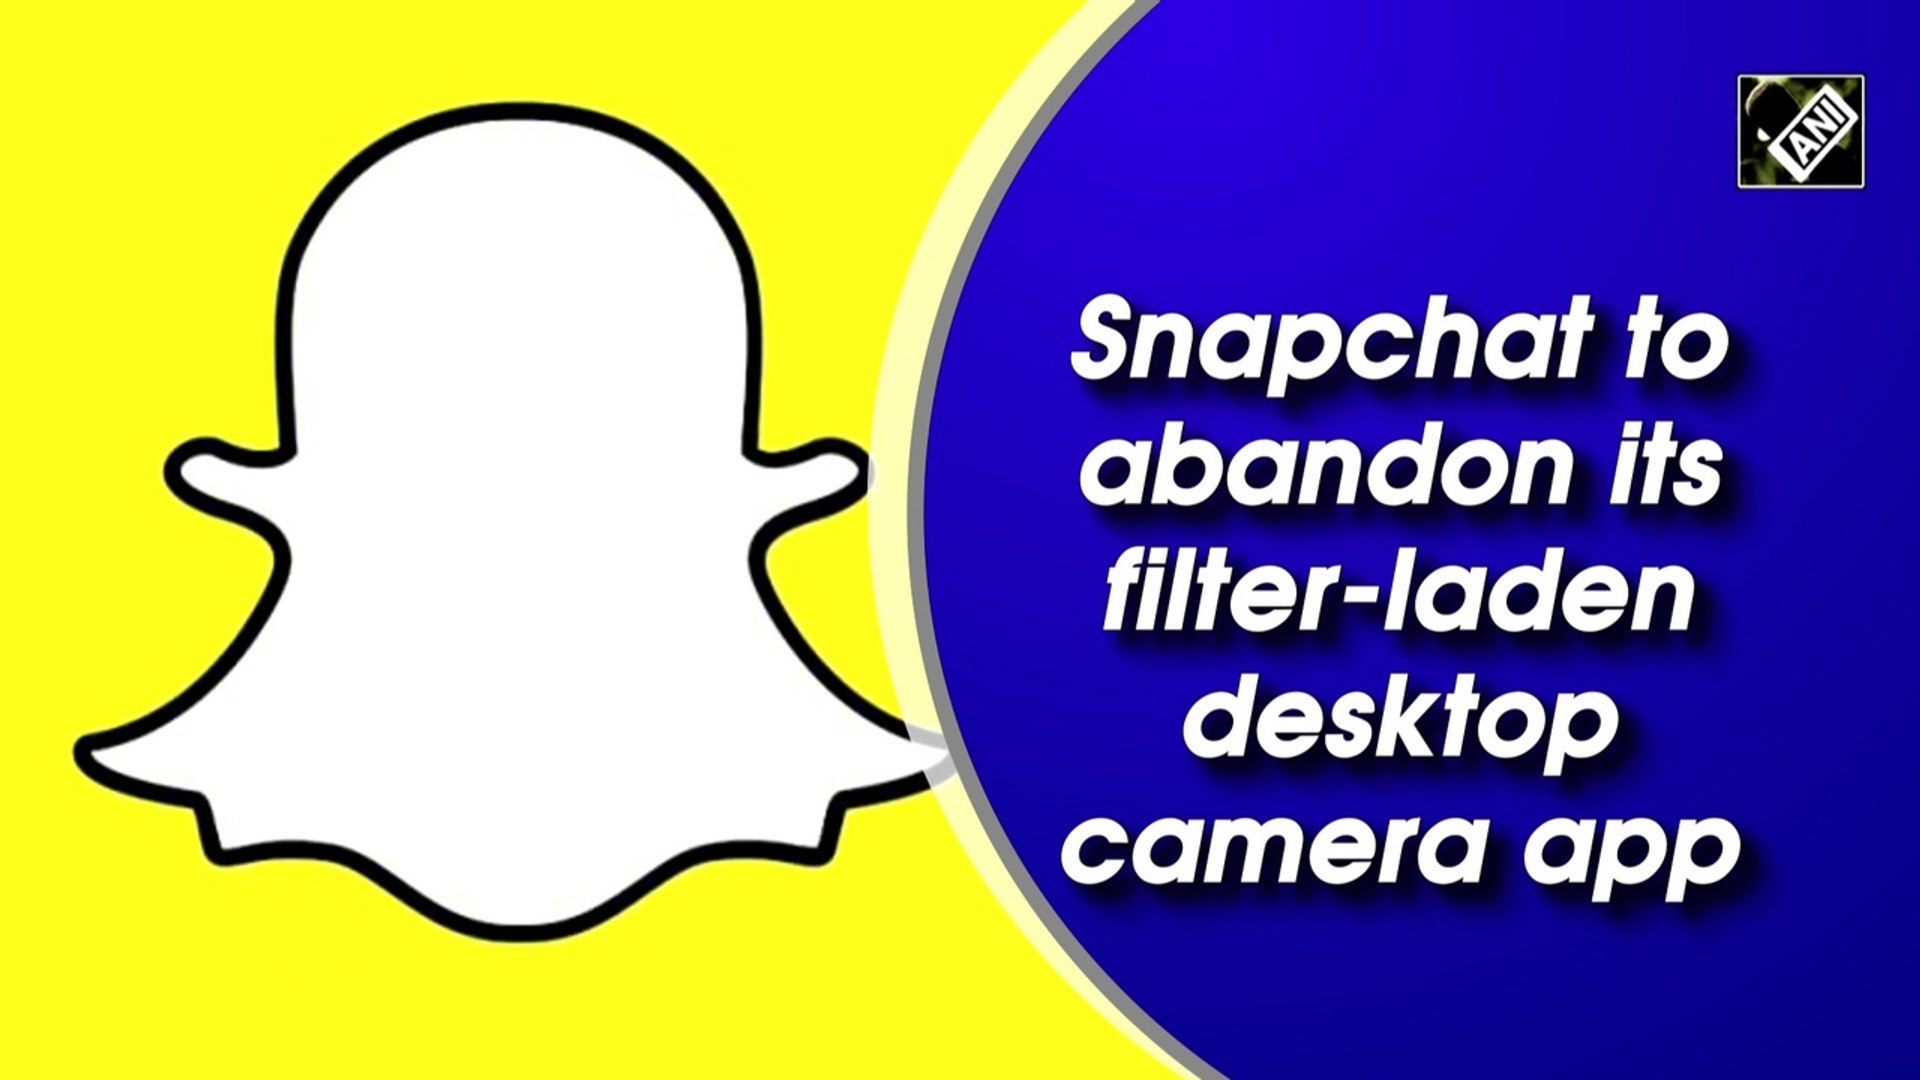 Snapchat to abandon its desktop camera app - video Dailymotion